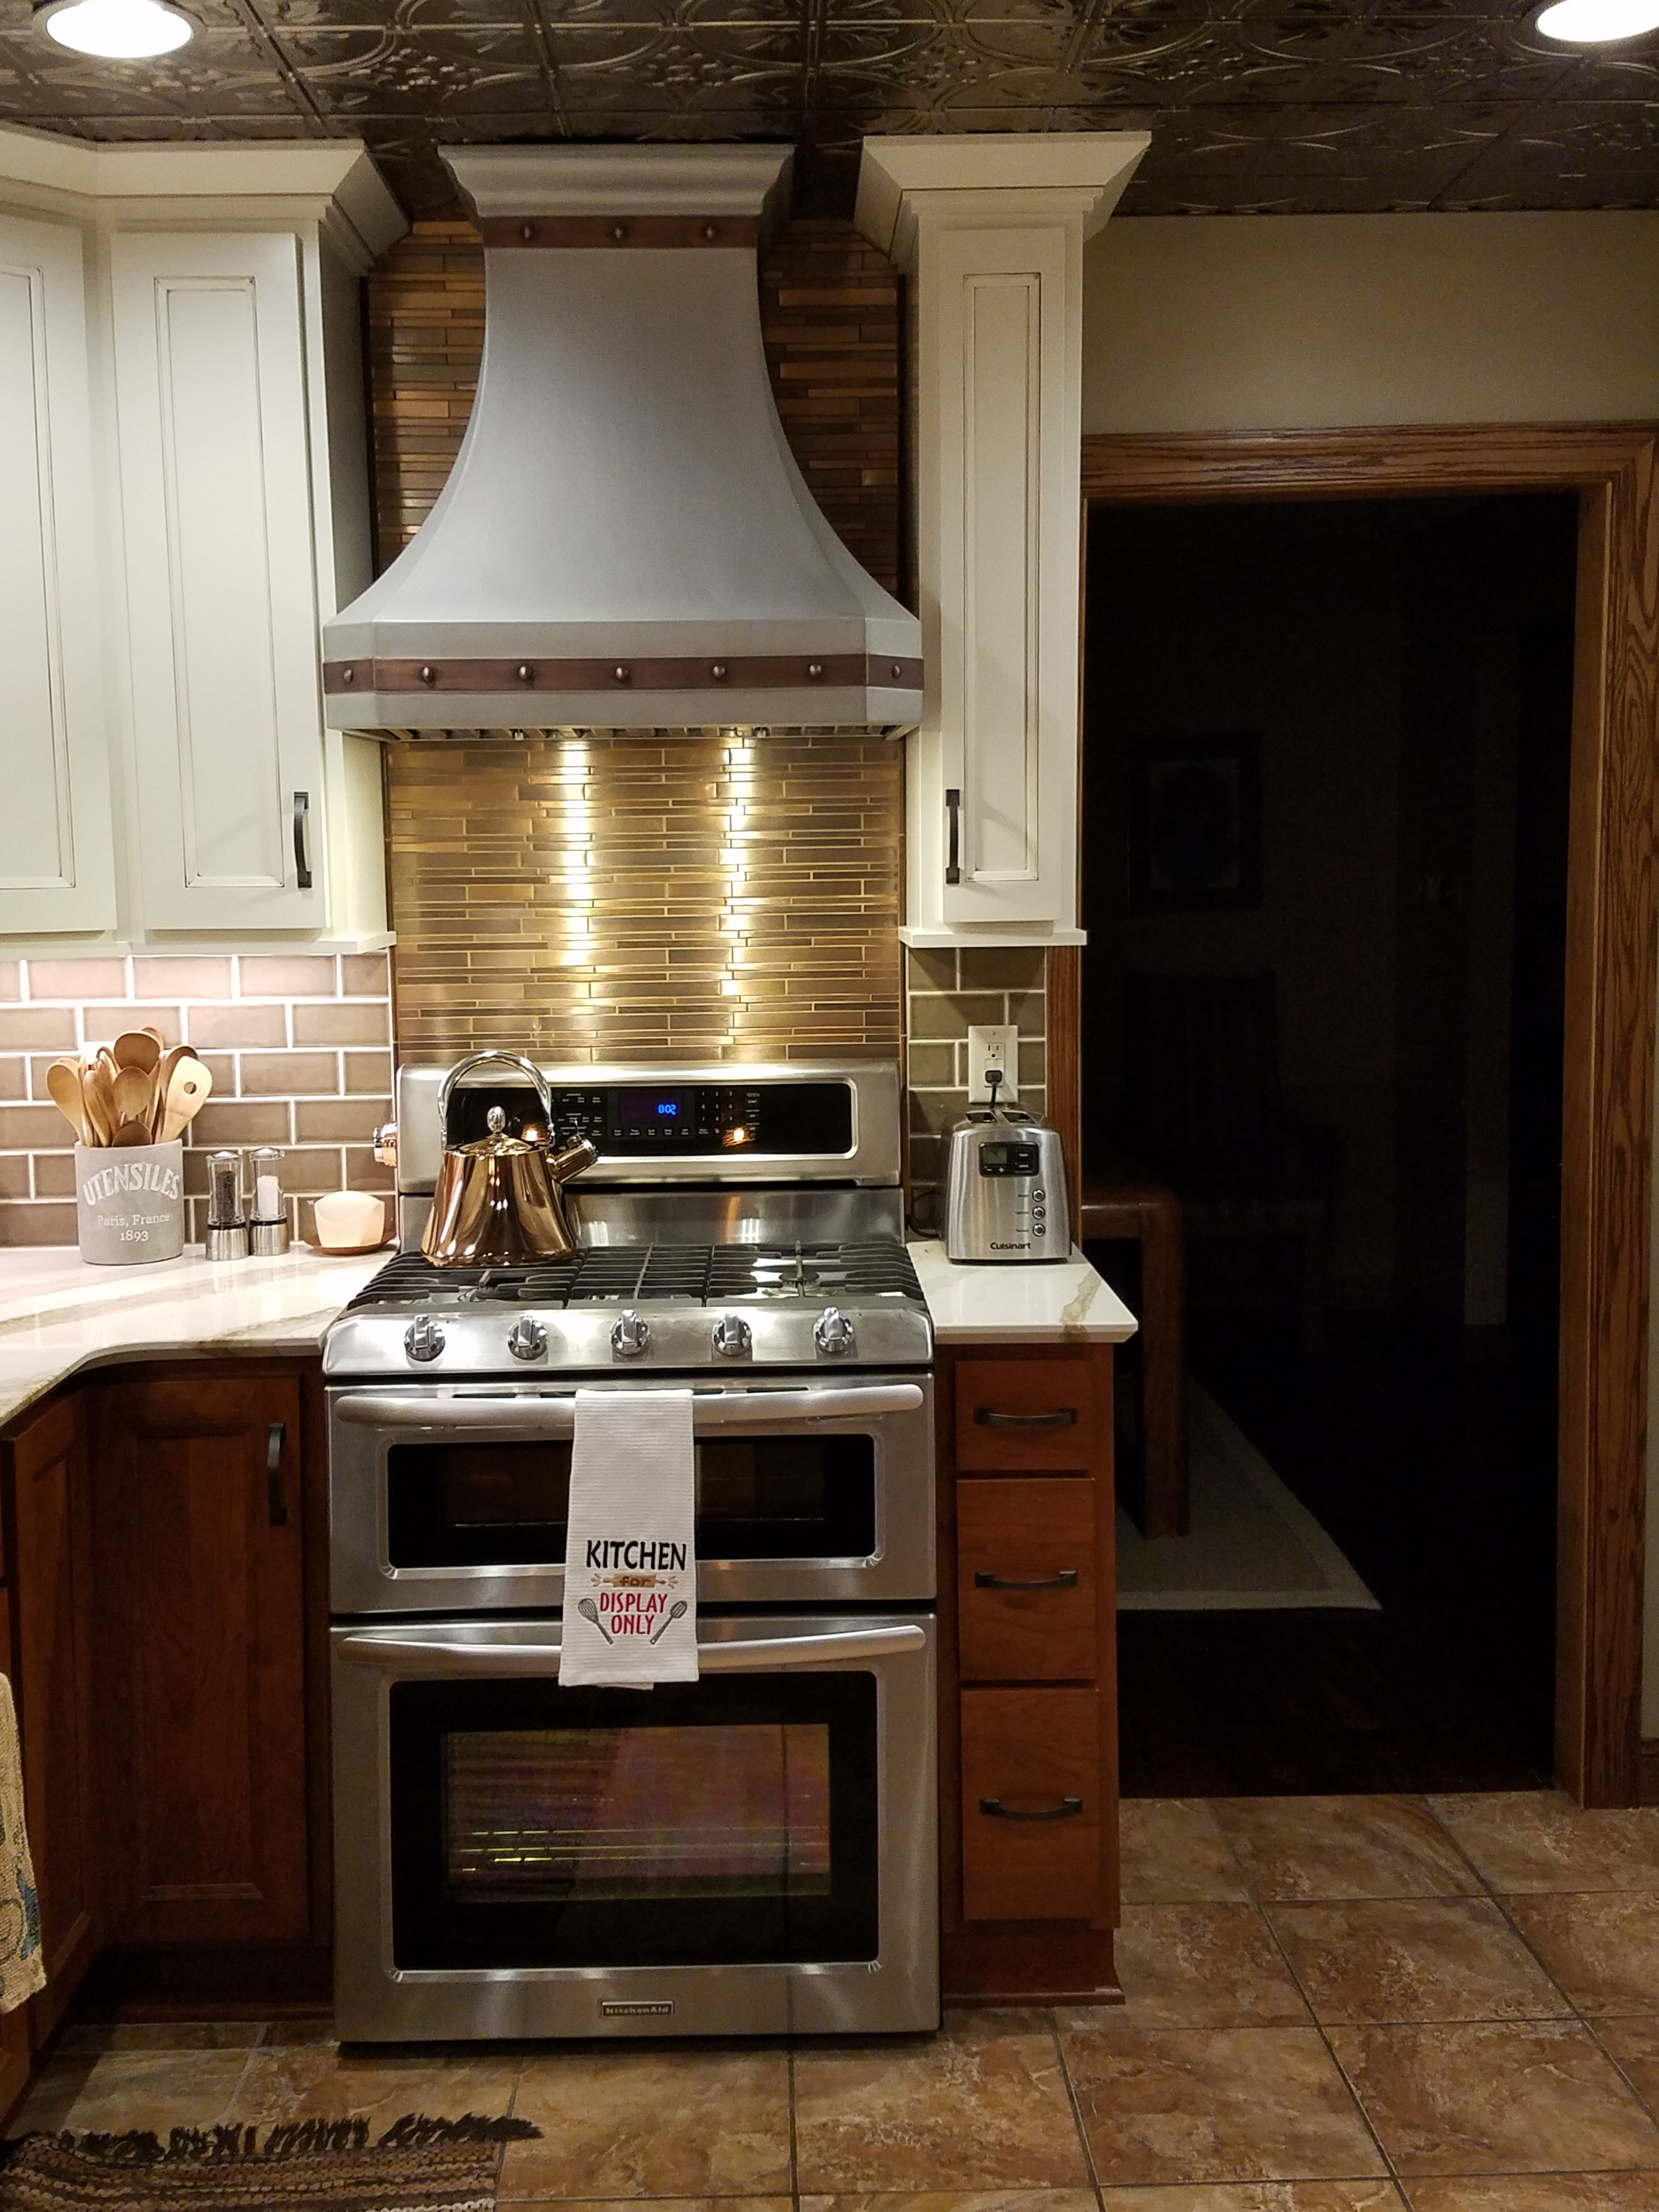 Trending kitchen design idea with range hood design features brown kitchen cabinets, marble kitchen countertops stylish marble backsplash